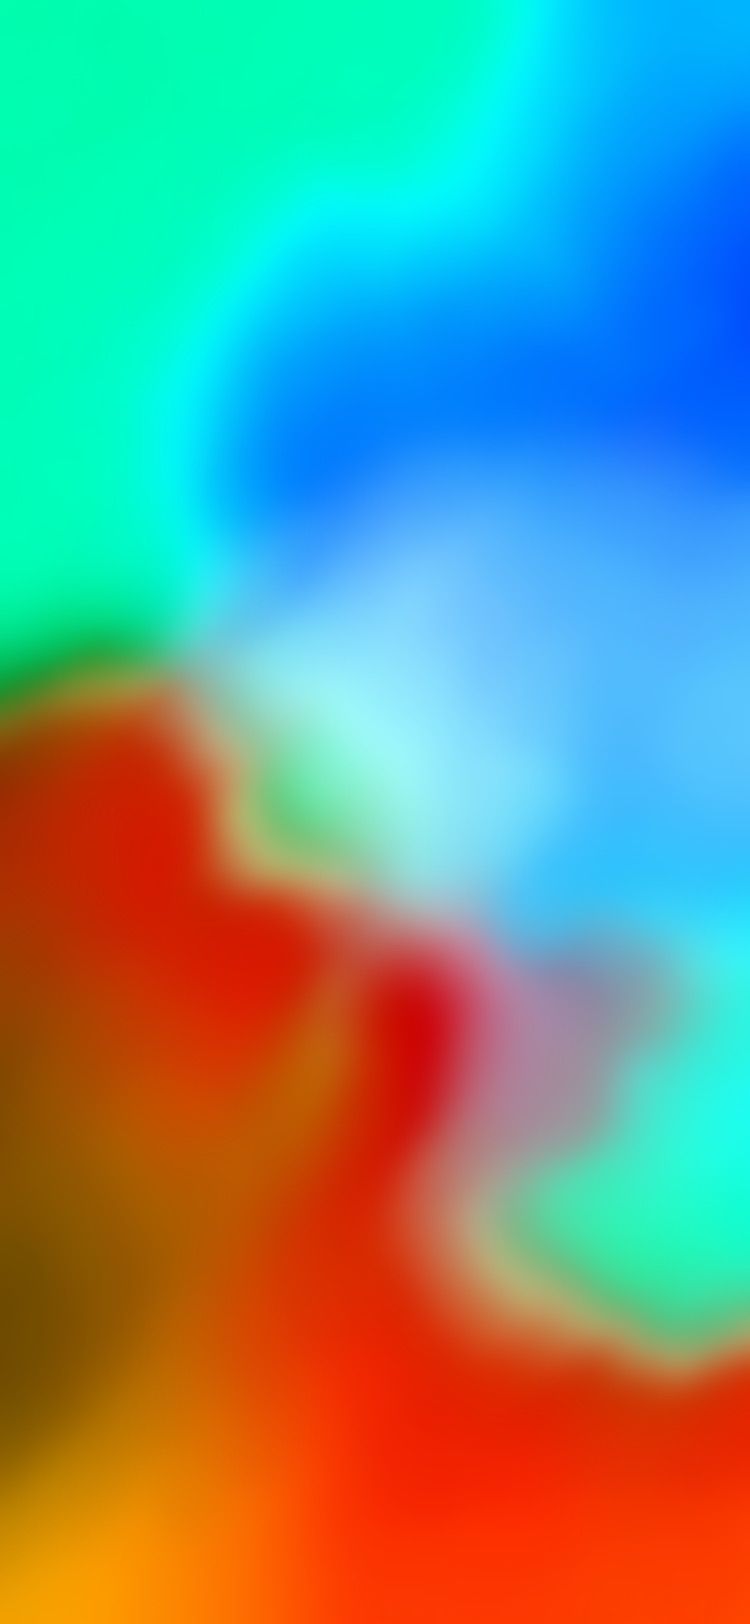 Orange, blue, aqua, wallpaper, pattern, galaxy, colour, abstract, digital art, s walls, Samsung, galaxy. Oneplus wallpaper, Samsung wallpaper, iPhone wallpaper